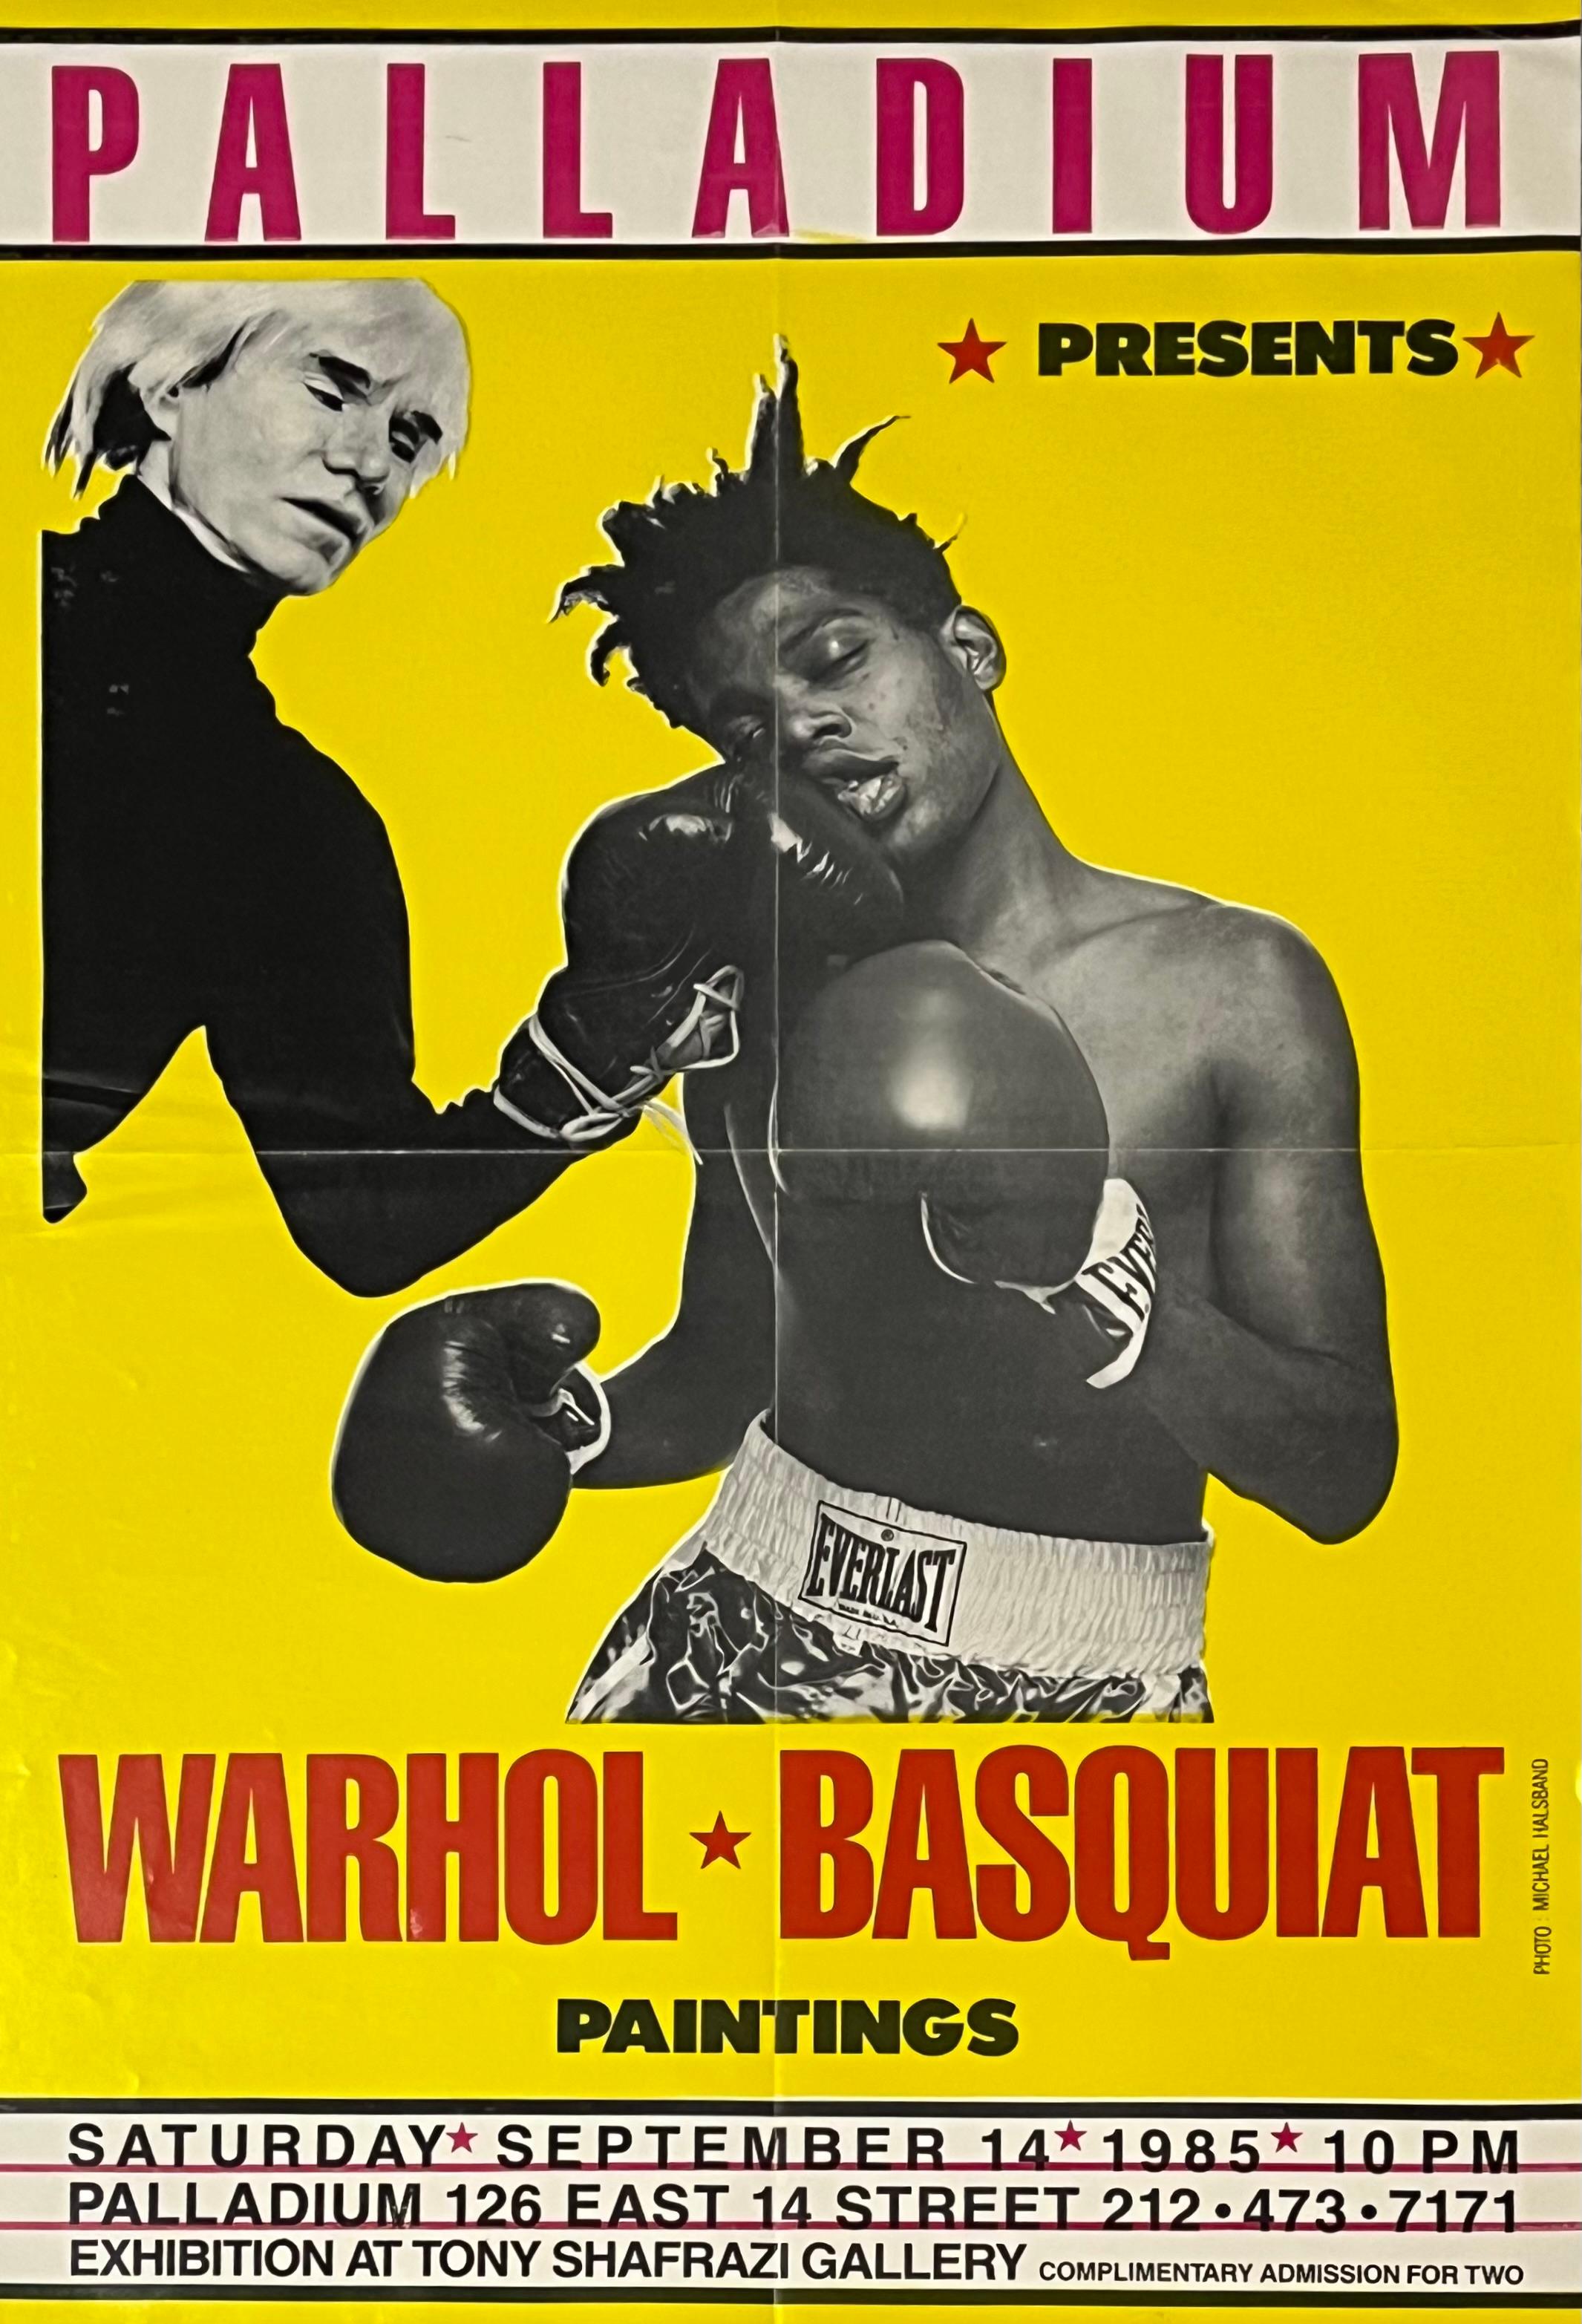 Michael Halsband Figurative Print - Warhol Basquiat Boxing Poster (Basquiat Warhol boxing The Palladium)